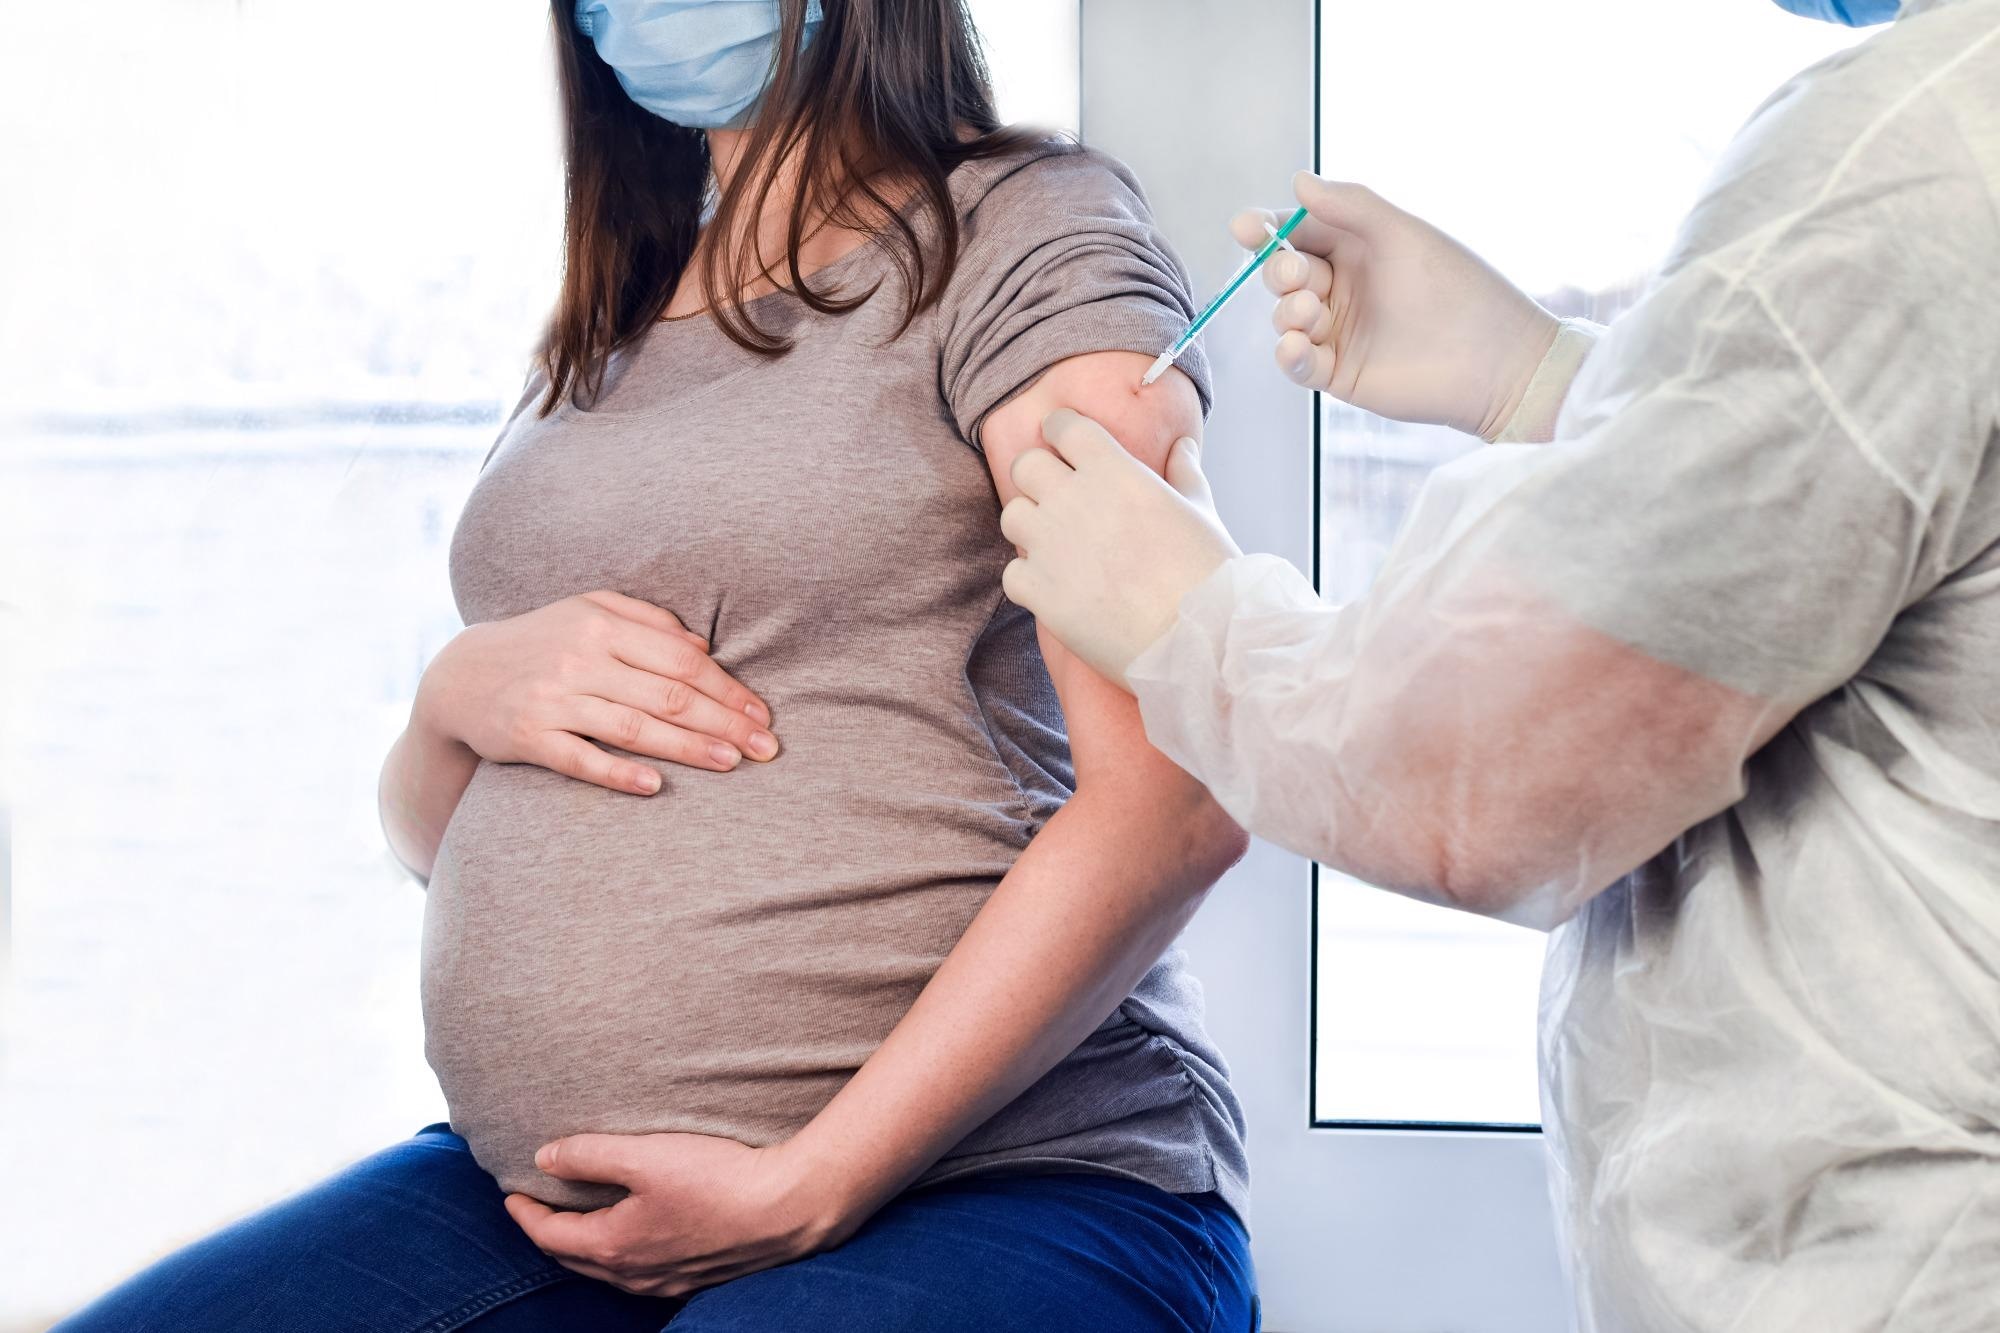 Investigation: Association of COVID-19 Vaccination in Pregnancy With Adverse Peripartum Outcomes. Image Credit: Marina Demidiuk / Shutterstock